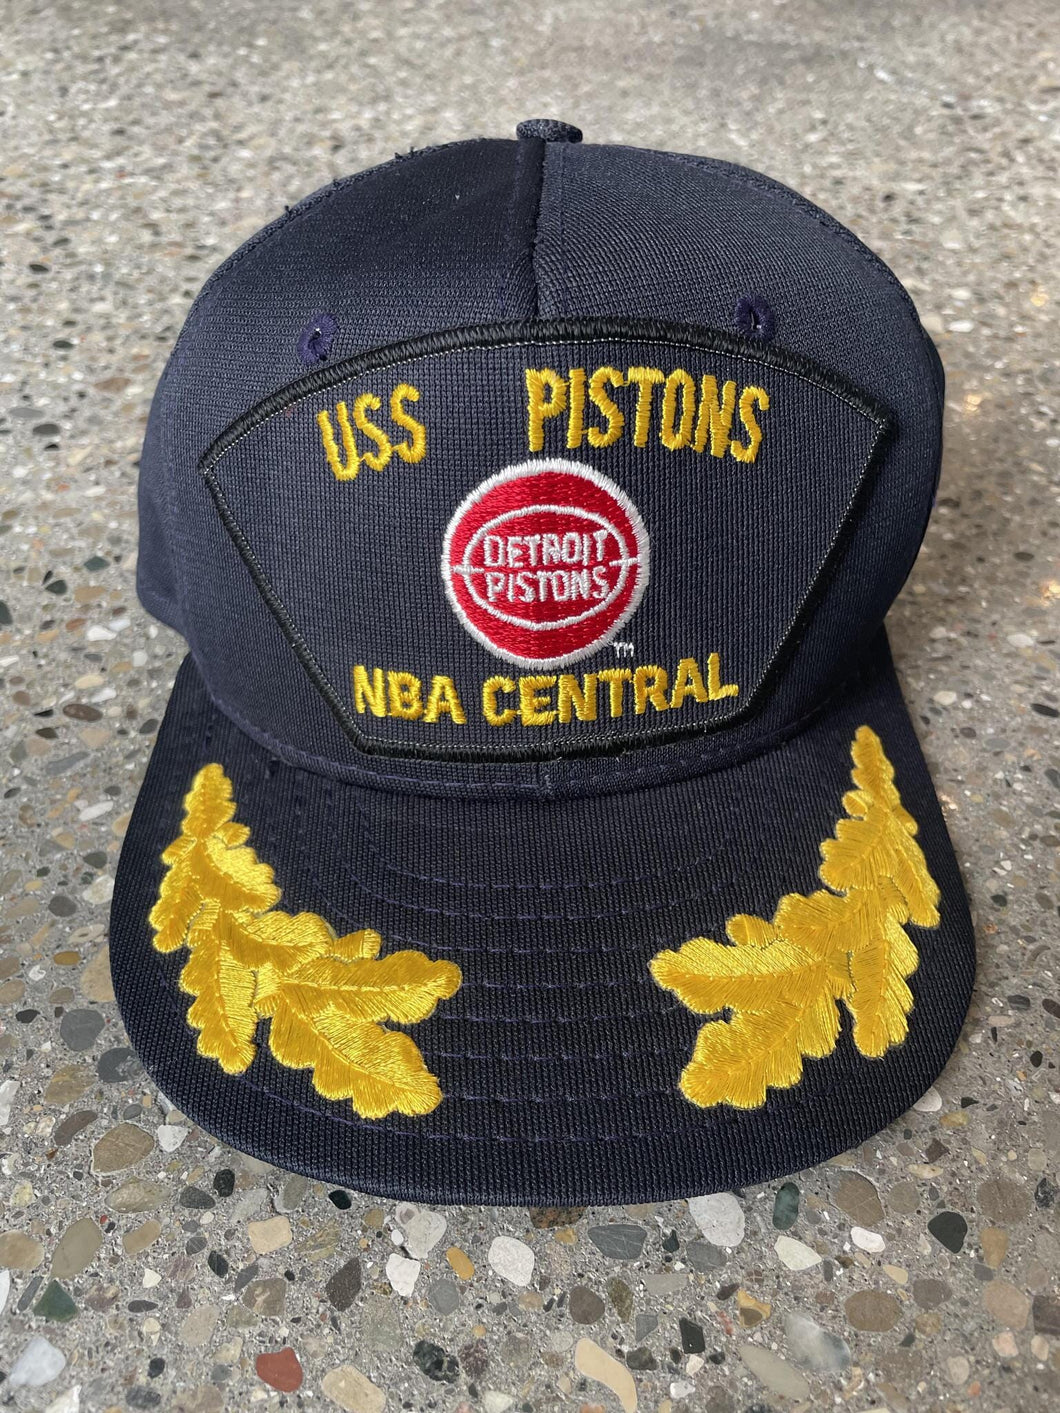 Detroit Pistons Vintage USS Pistons NBA Central Crest Snapback ABC Vintage 